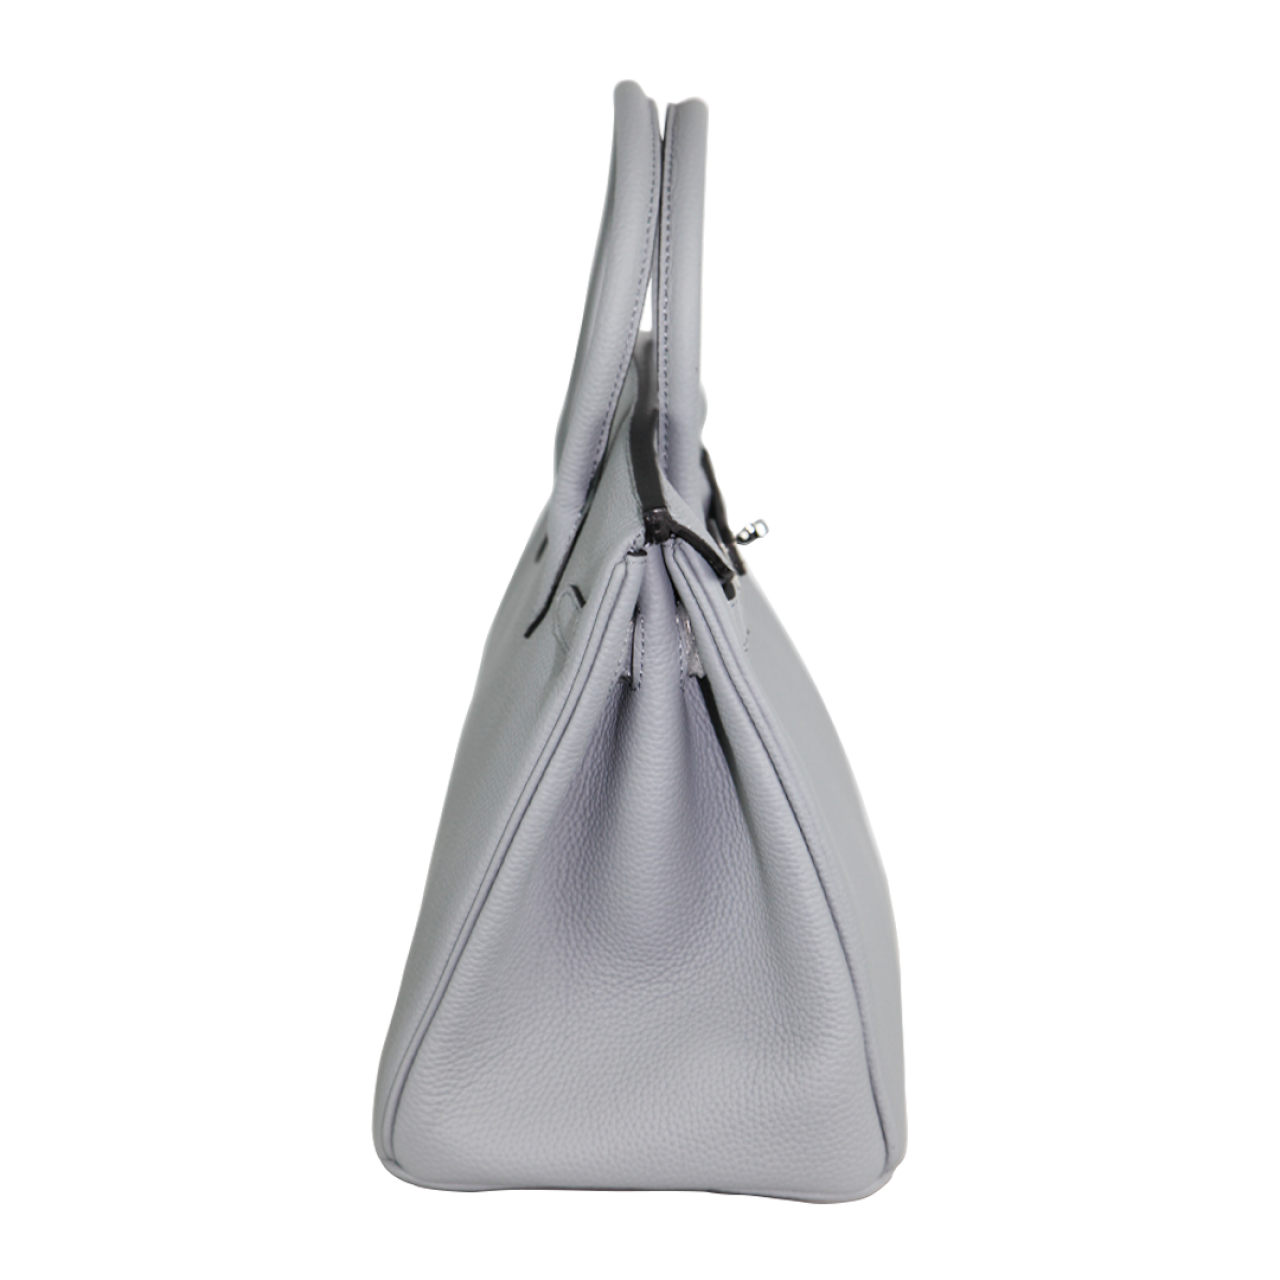 Zeekas Brand Women Solid Leather Satchel White Handbag With Silver Hardware Top Handle Purse